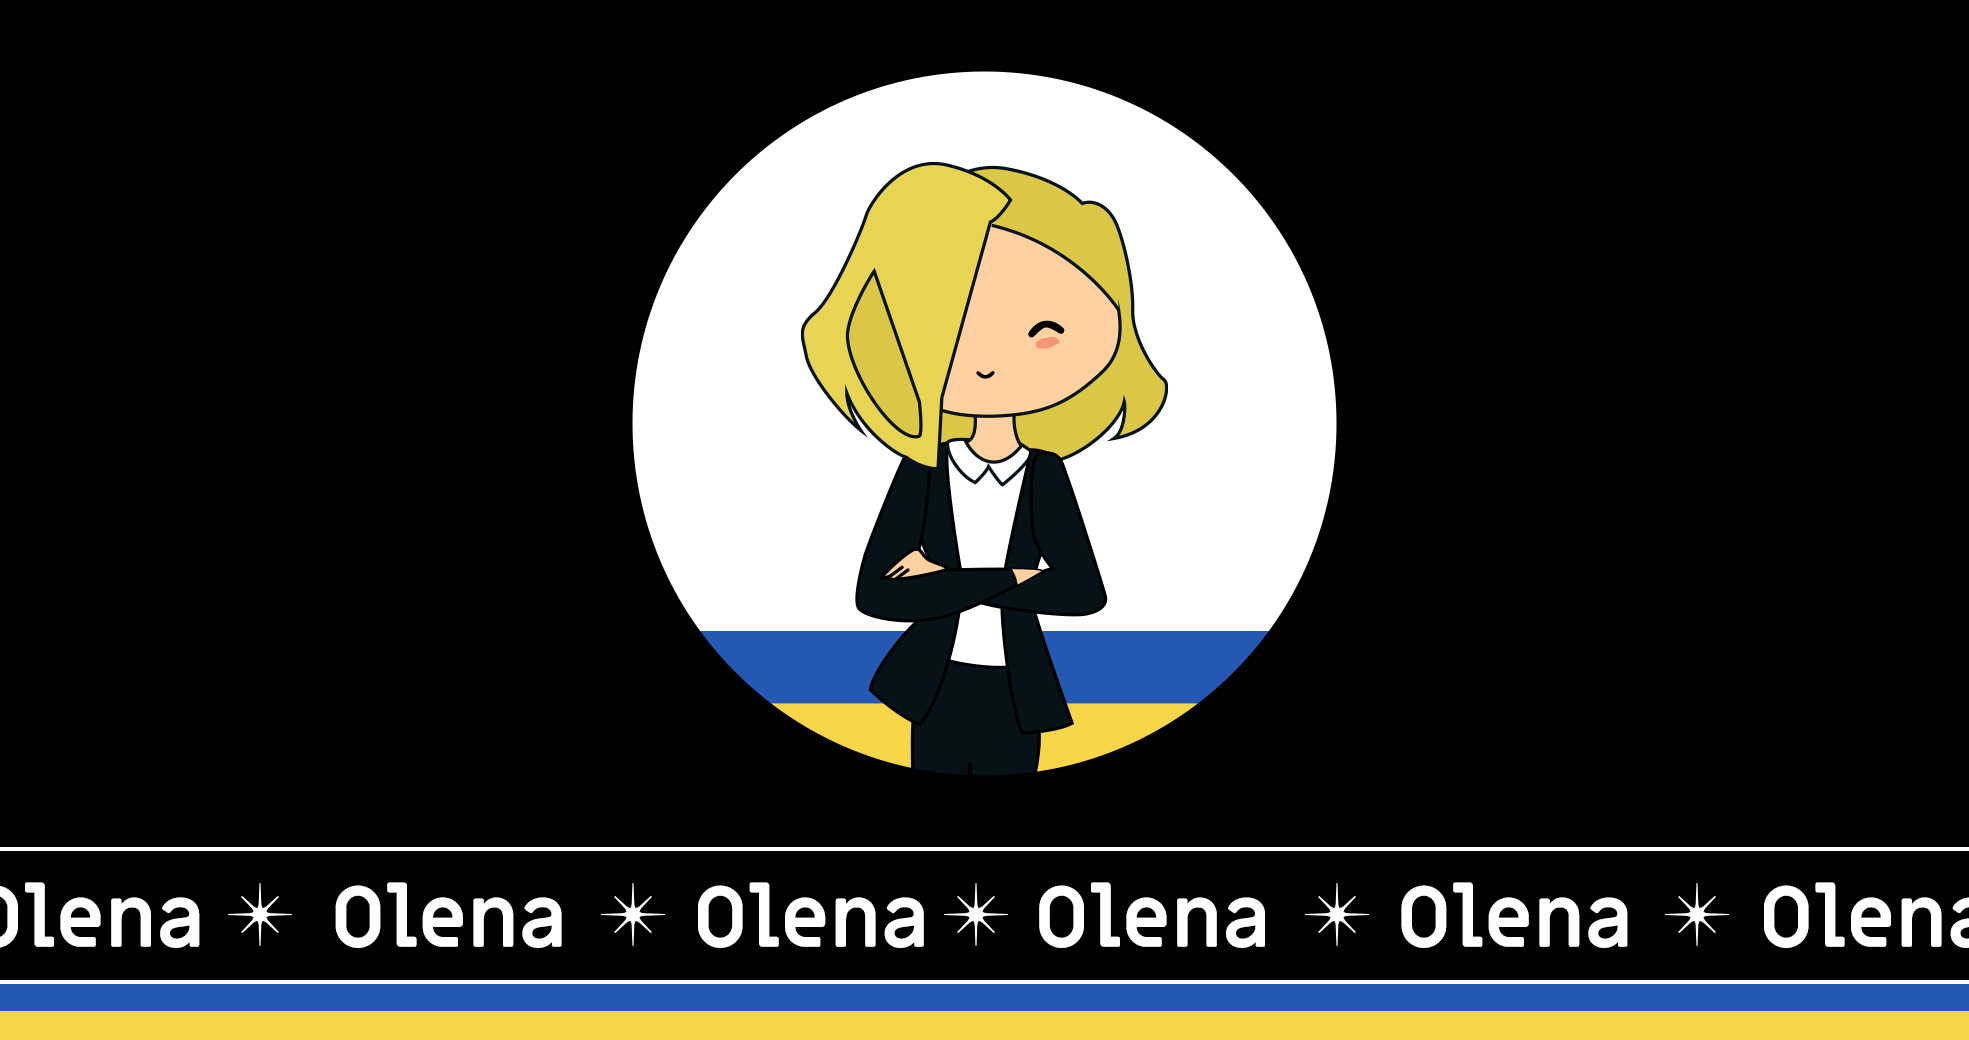 Olena collection logo by Divi Den Pro